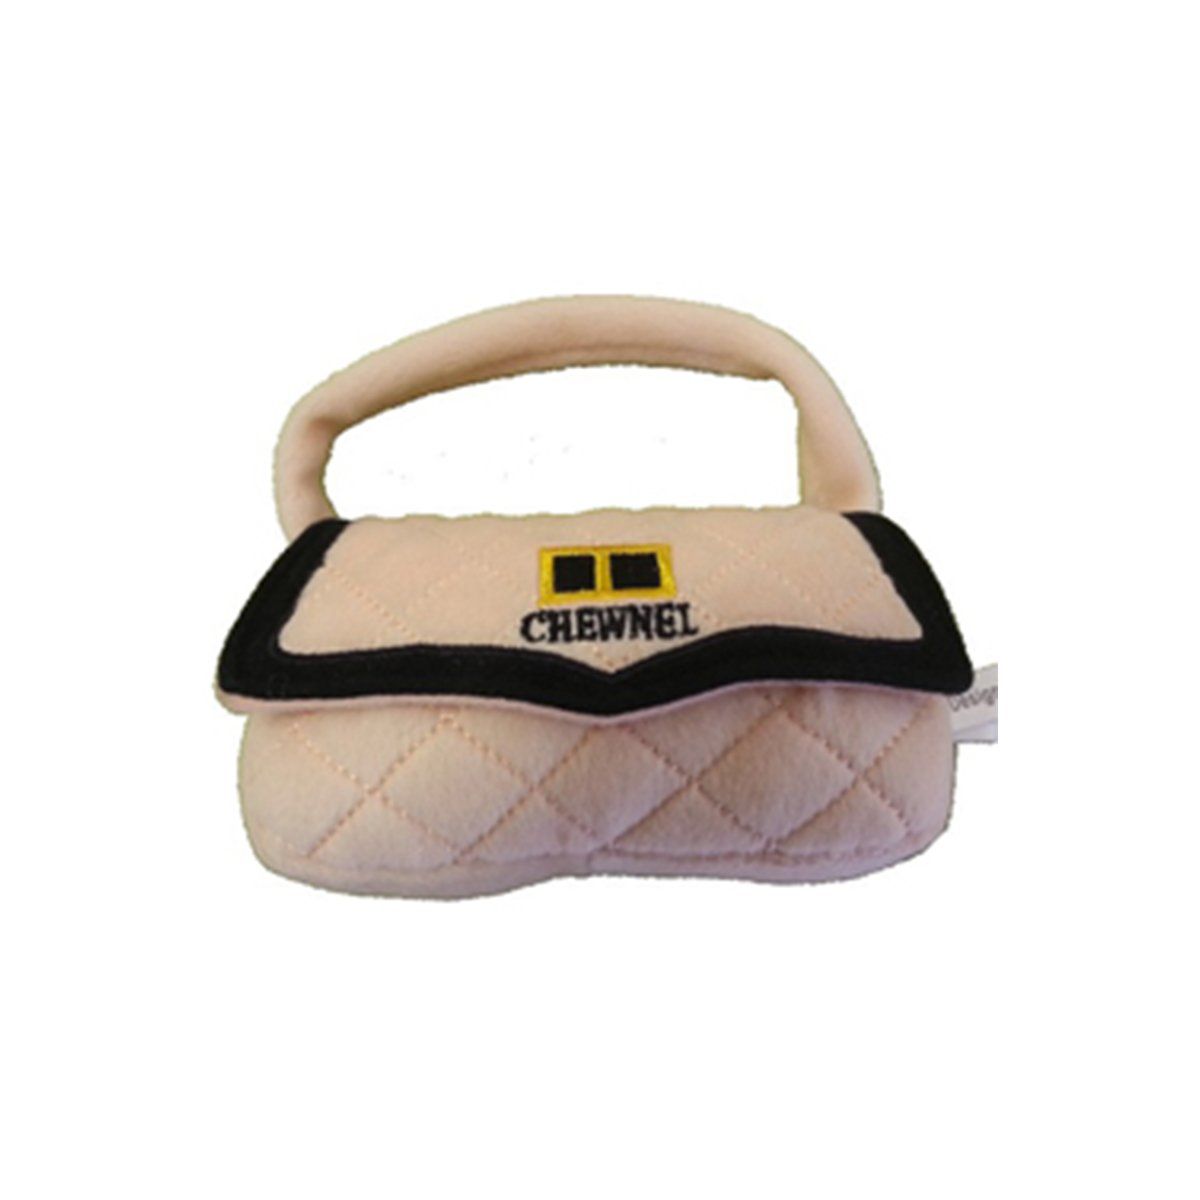 Chewnel Dog Toy Handbag | Pawlicious & Company